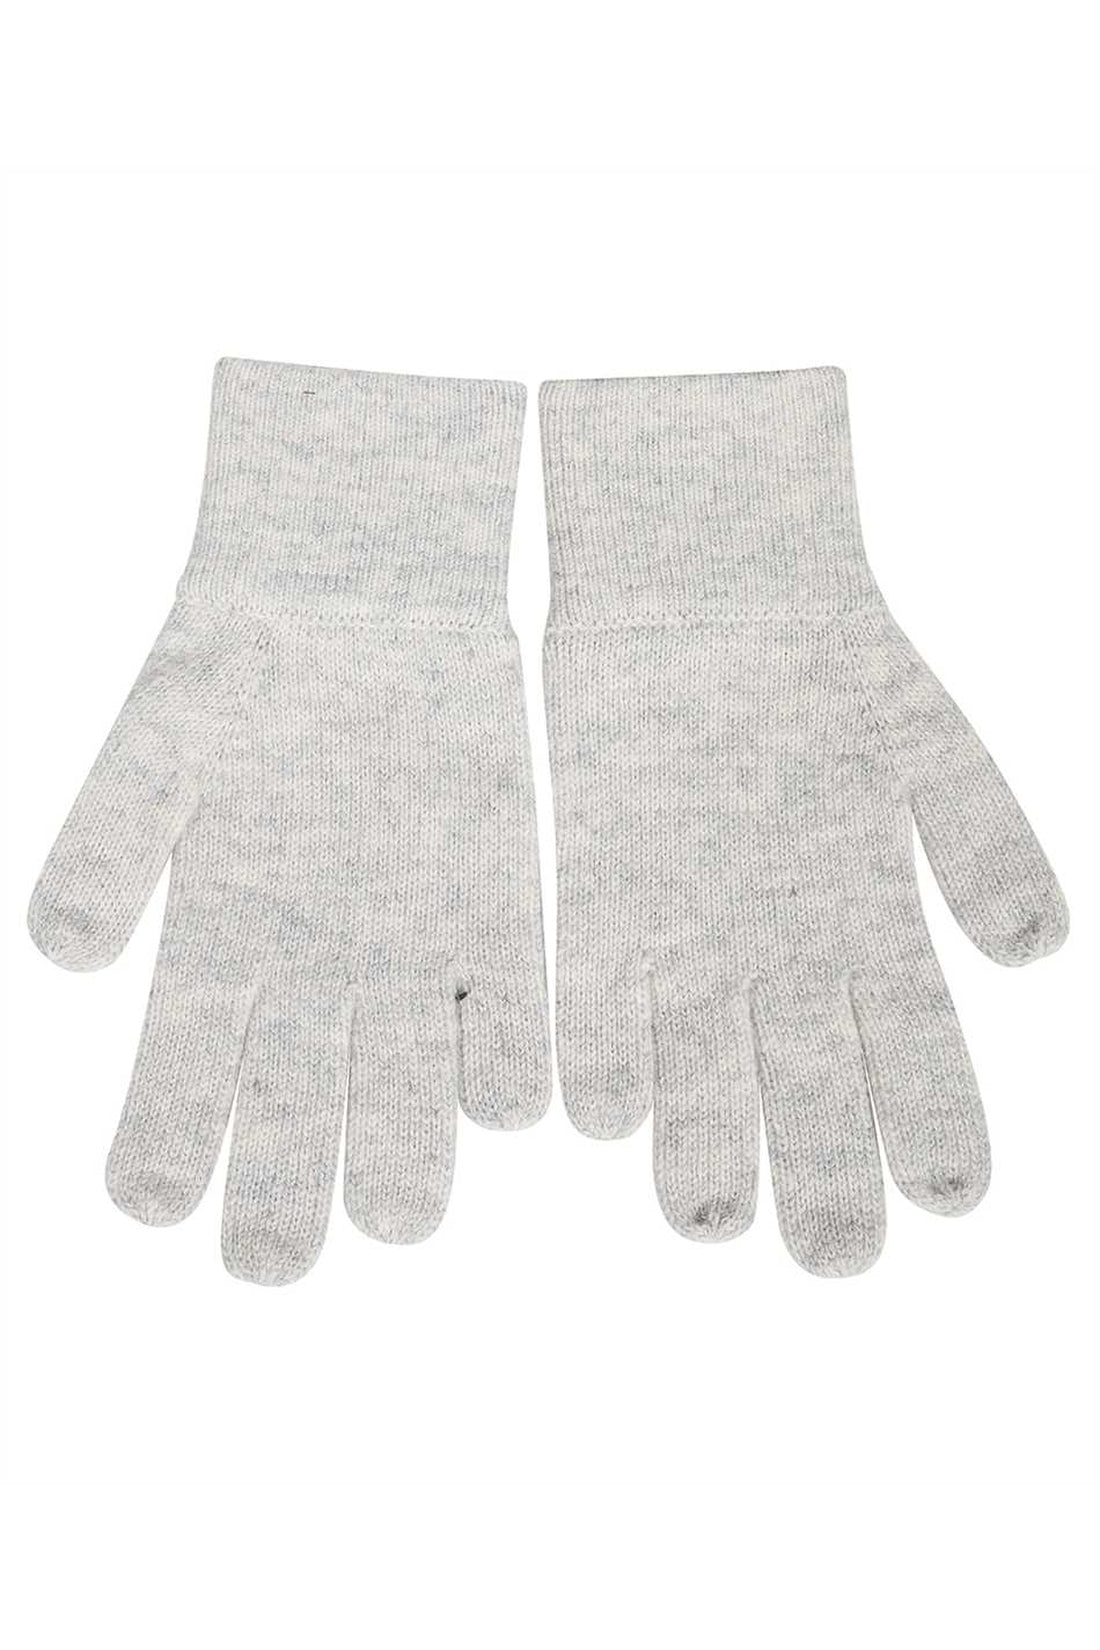 Moose Knuckles-OUTLET-SALE-Imlay wool gloves-ARCHIVIST